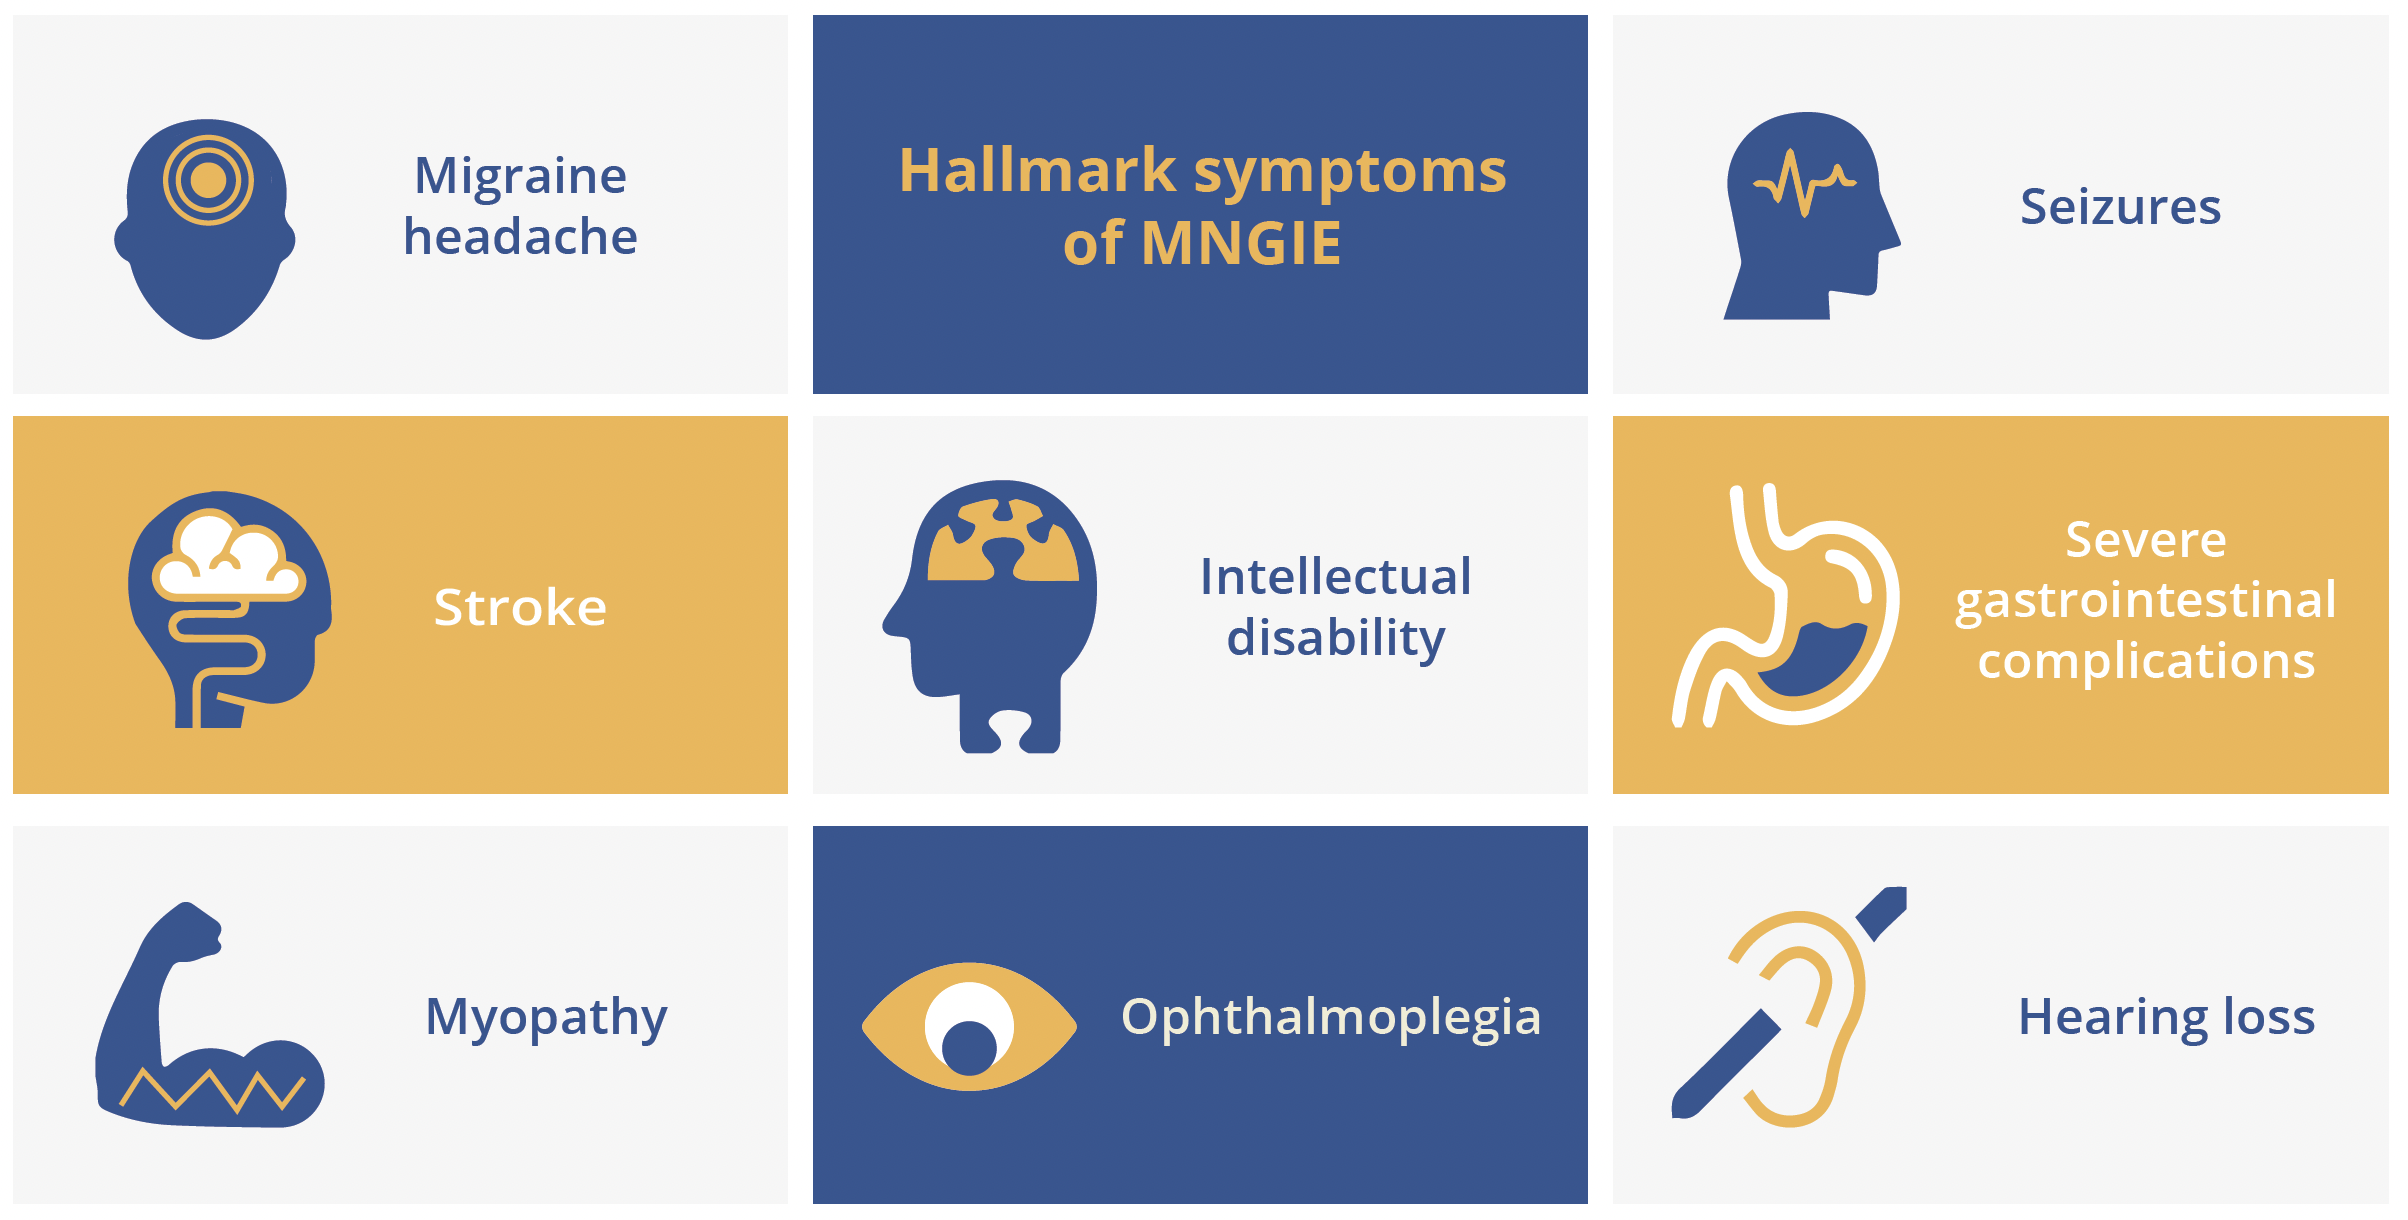 Hallmark symptoms of MNGIE include headache-migraine